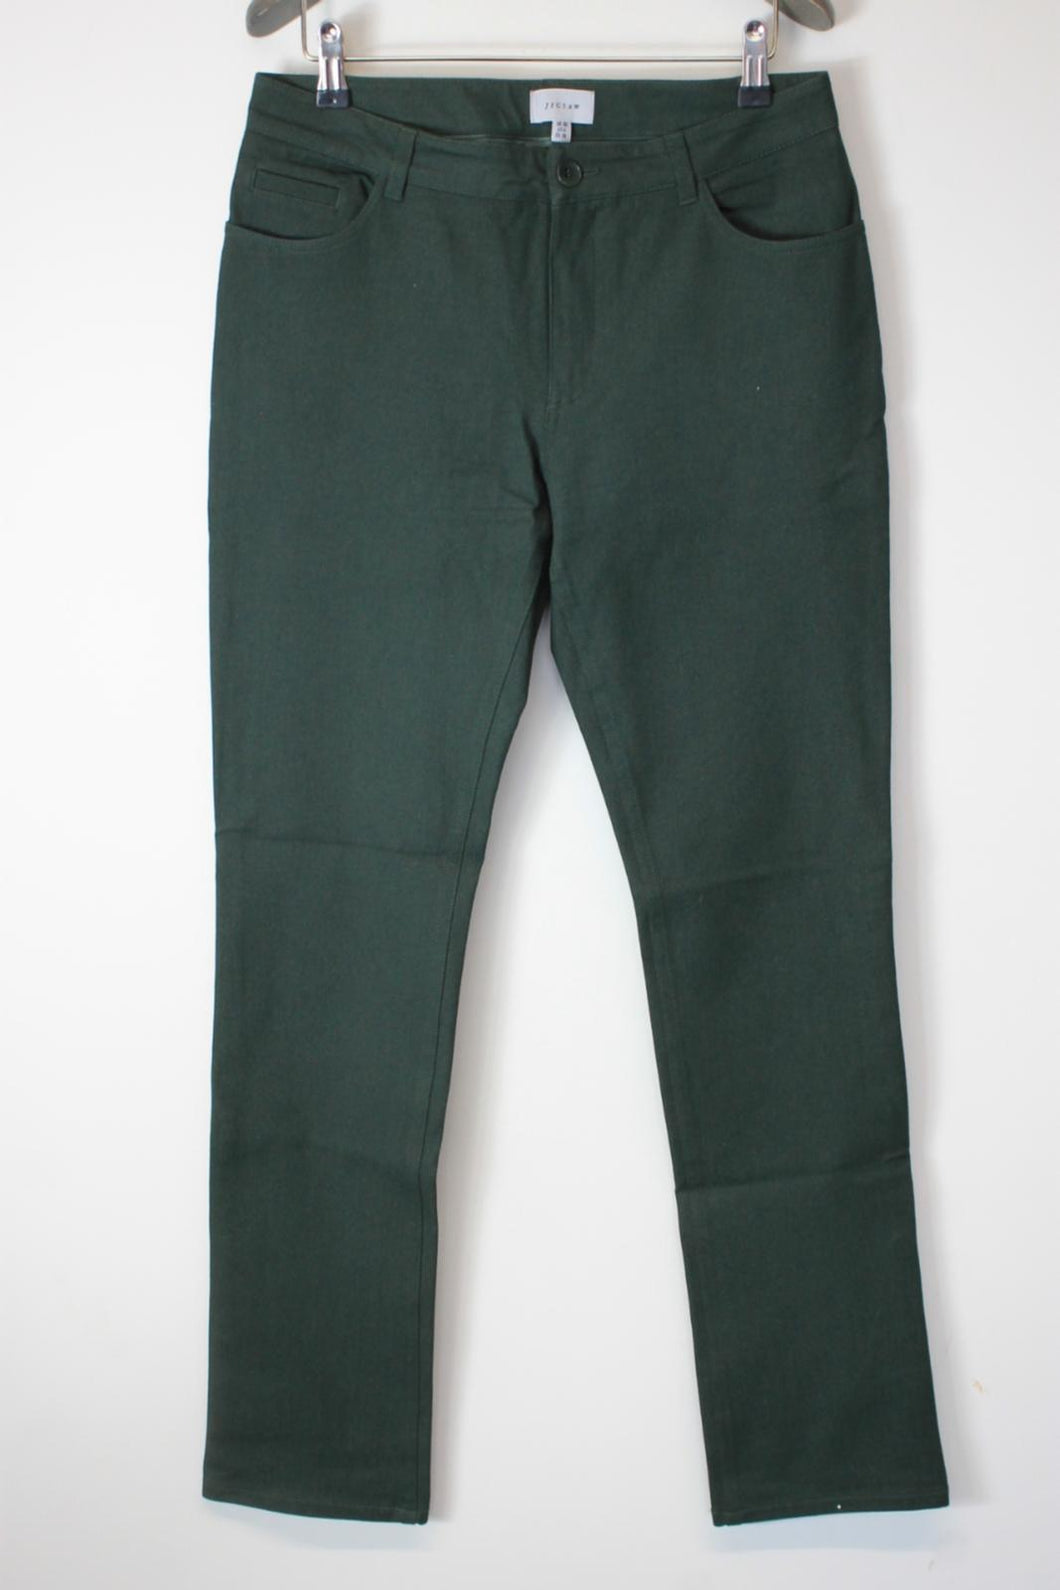 JIGSAW Ladies Green Cotton Blend Bi-Stretch Straight Leg Jeans EU38 UK10